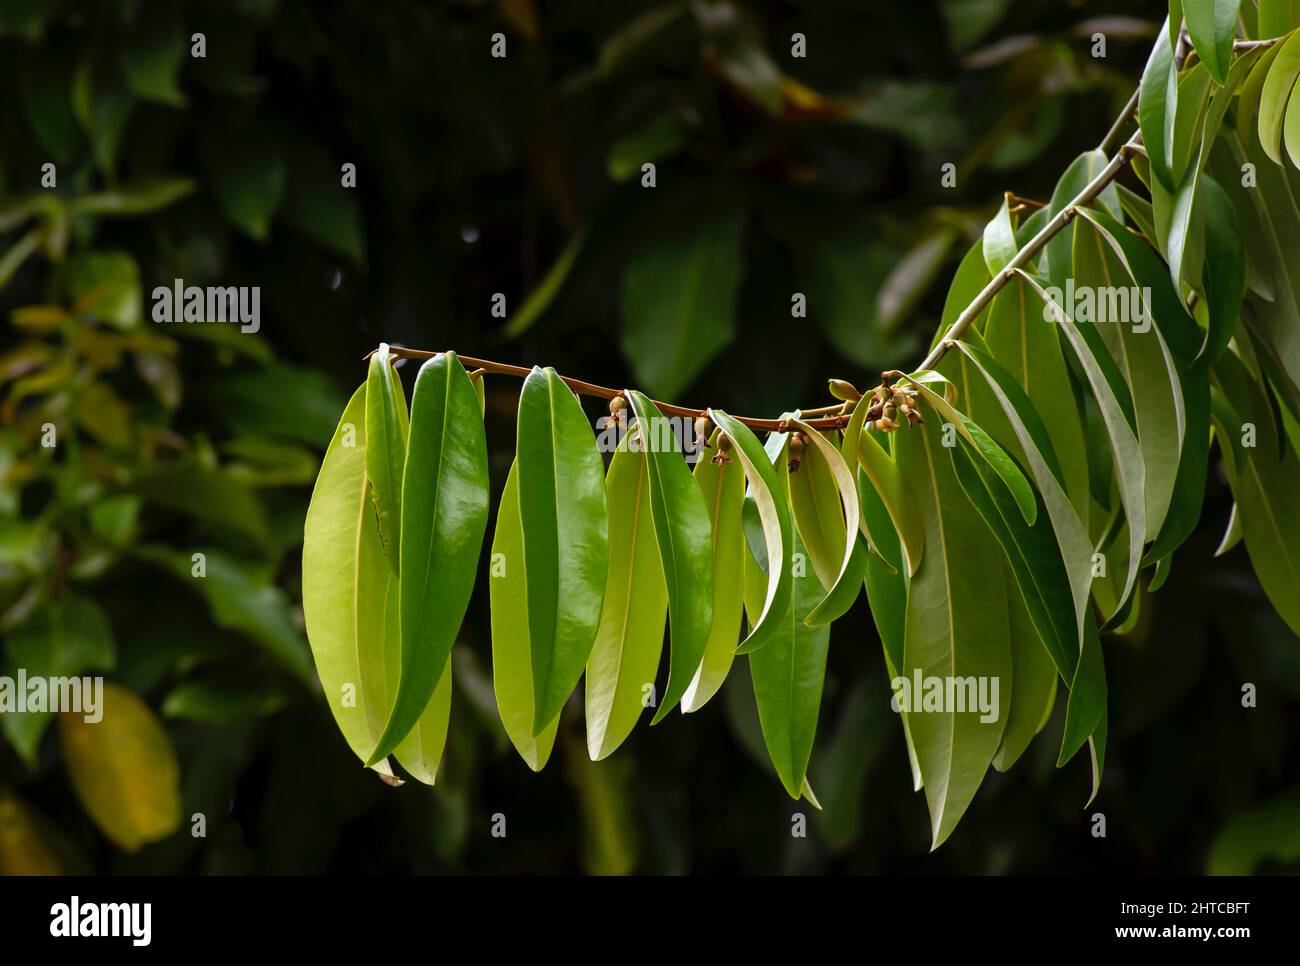 Indonesian dark wood, Ebony (Diospyros celebica) green leaves, seeds and flowers Stock Photo